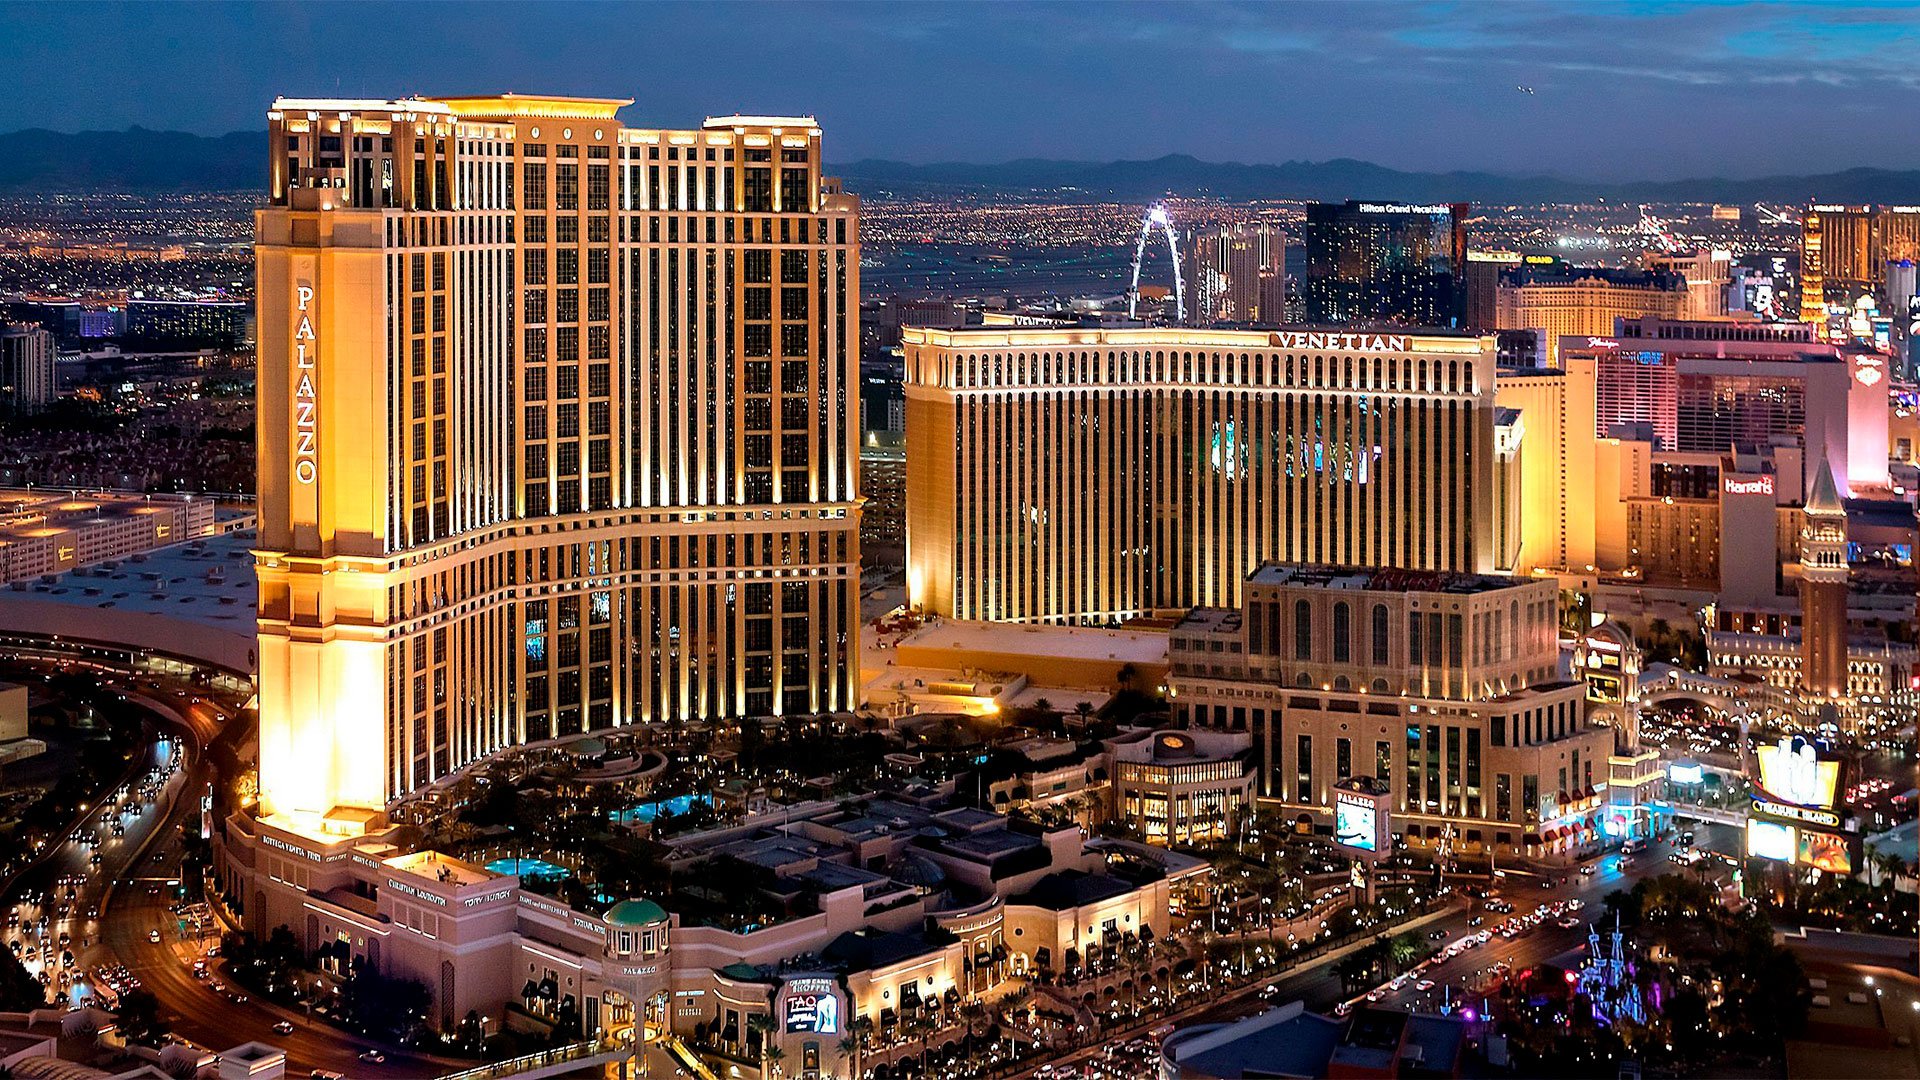 Venetian Las Vegas unveils expansive new poker room on level 2